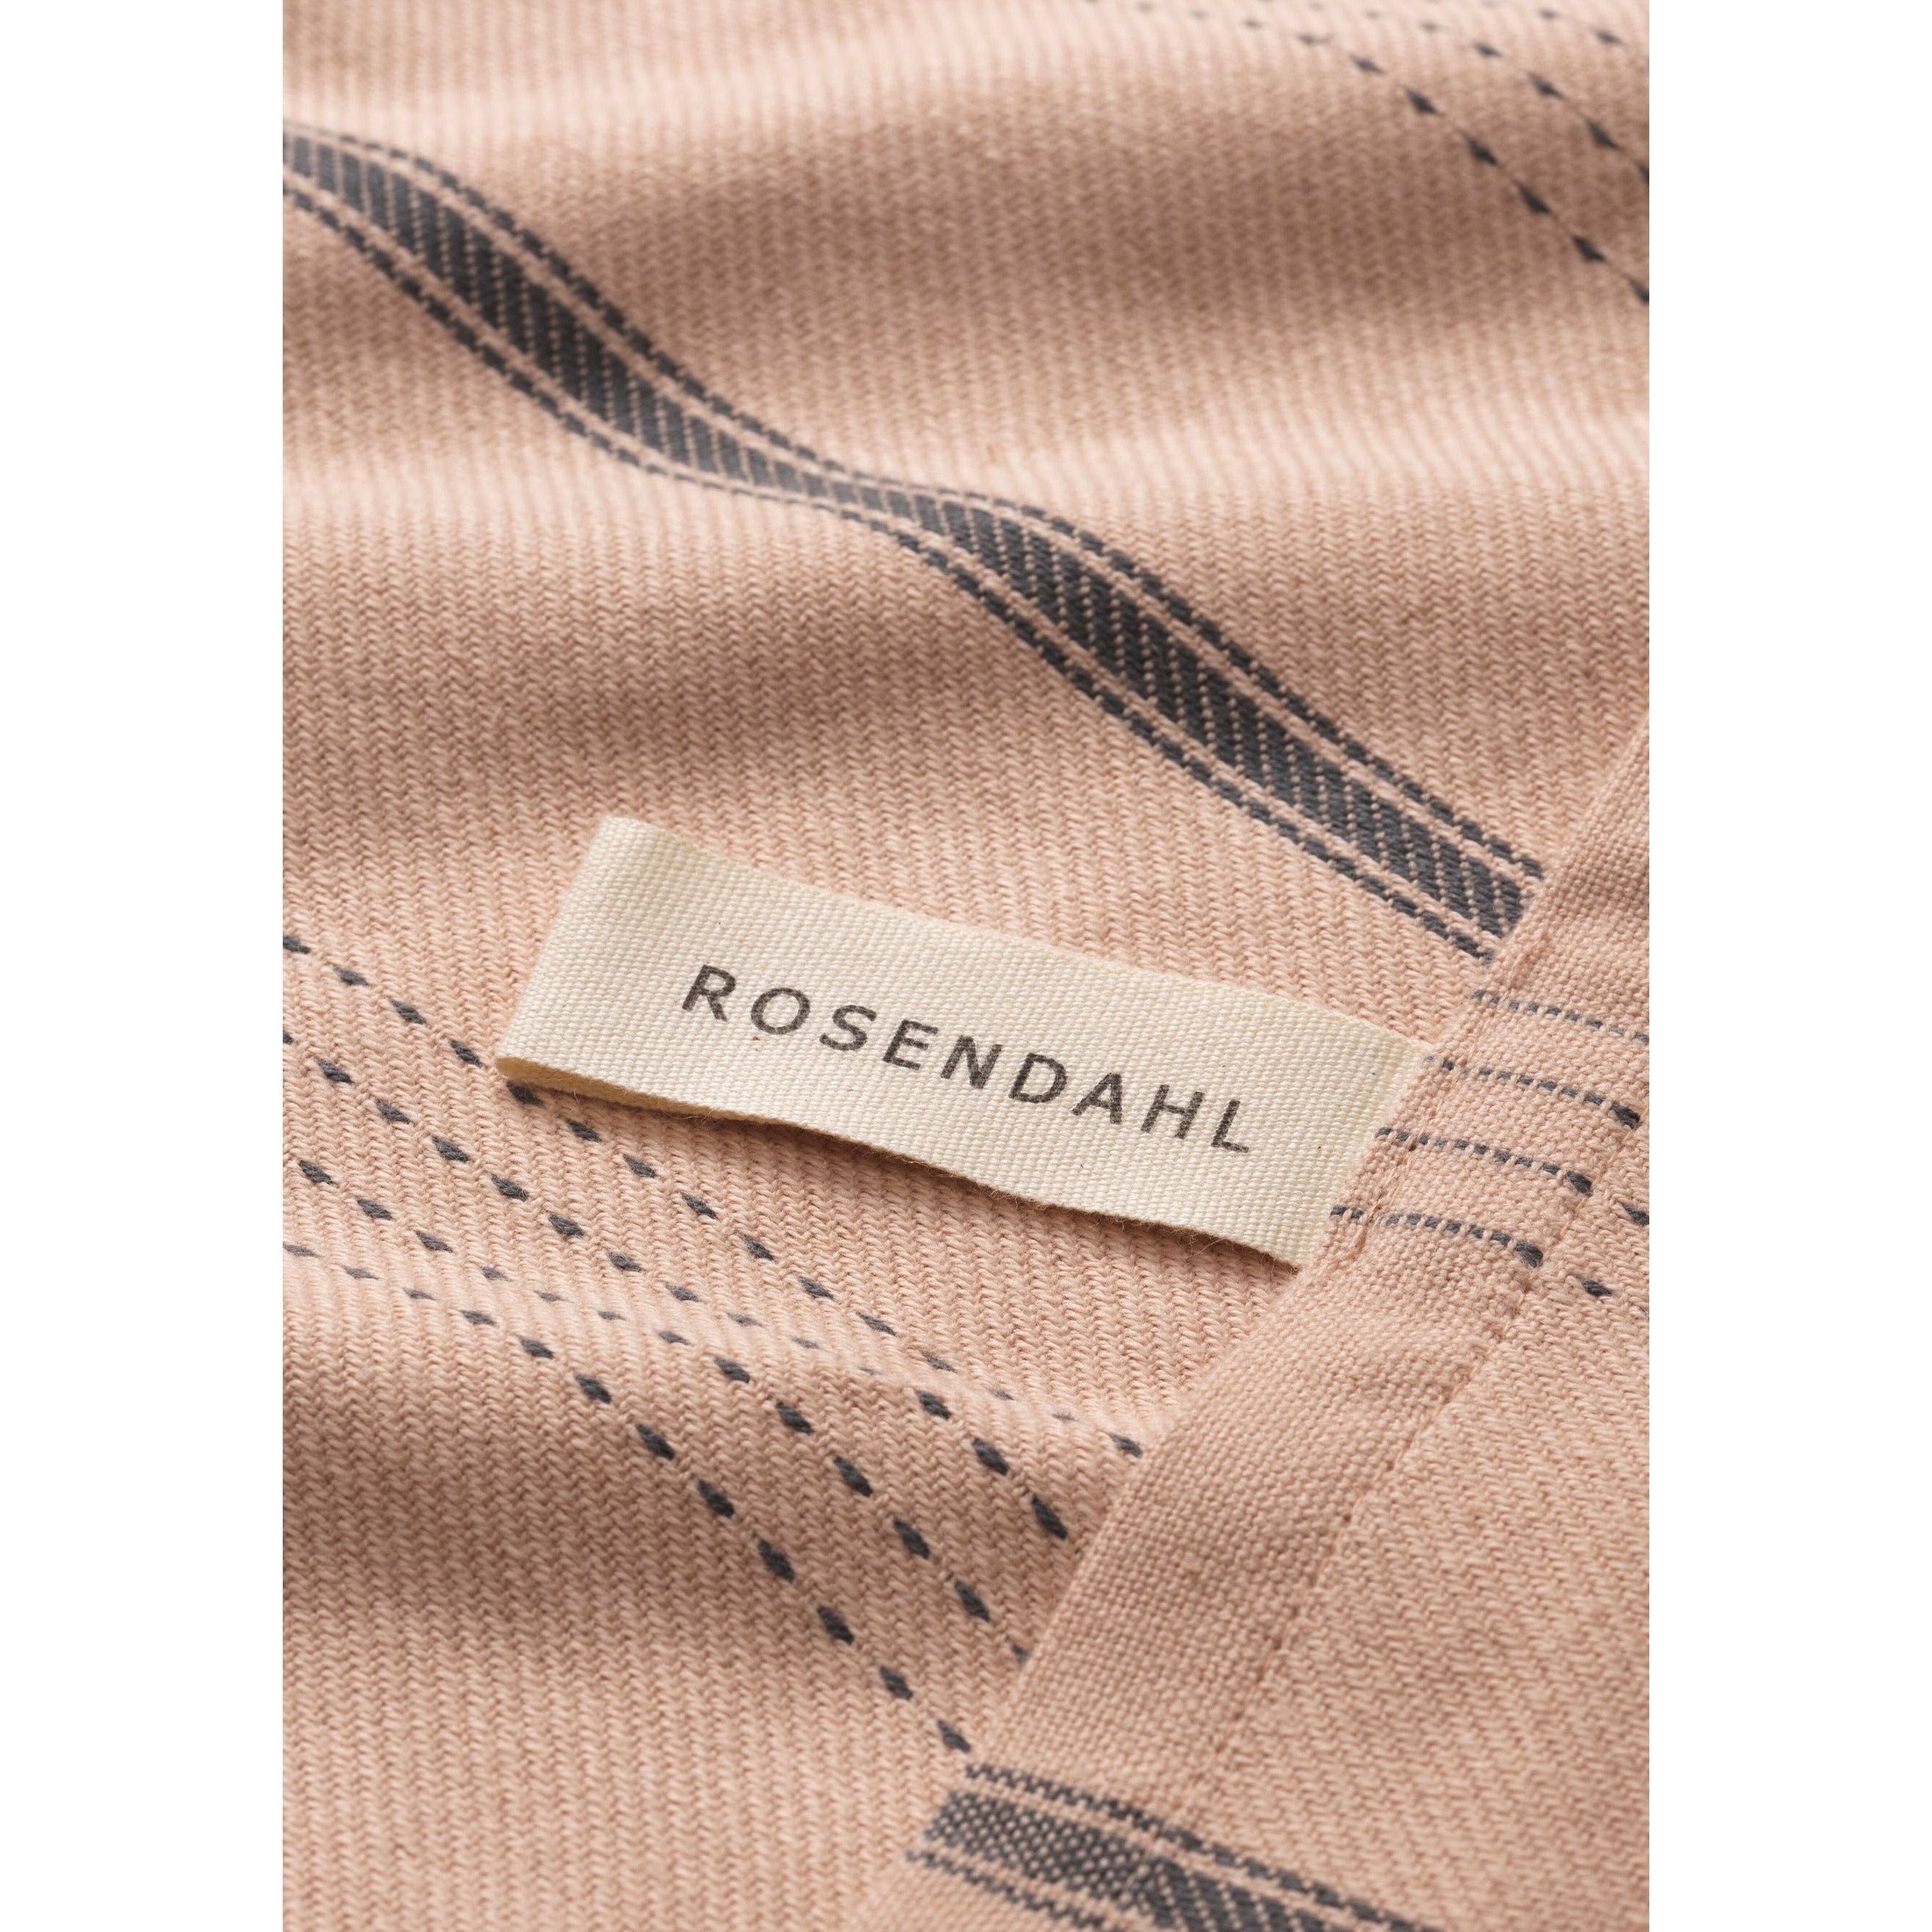 Rosendahl beta te håndklæde, rødme